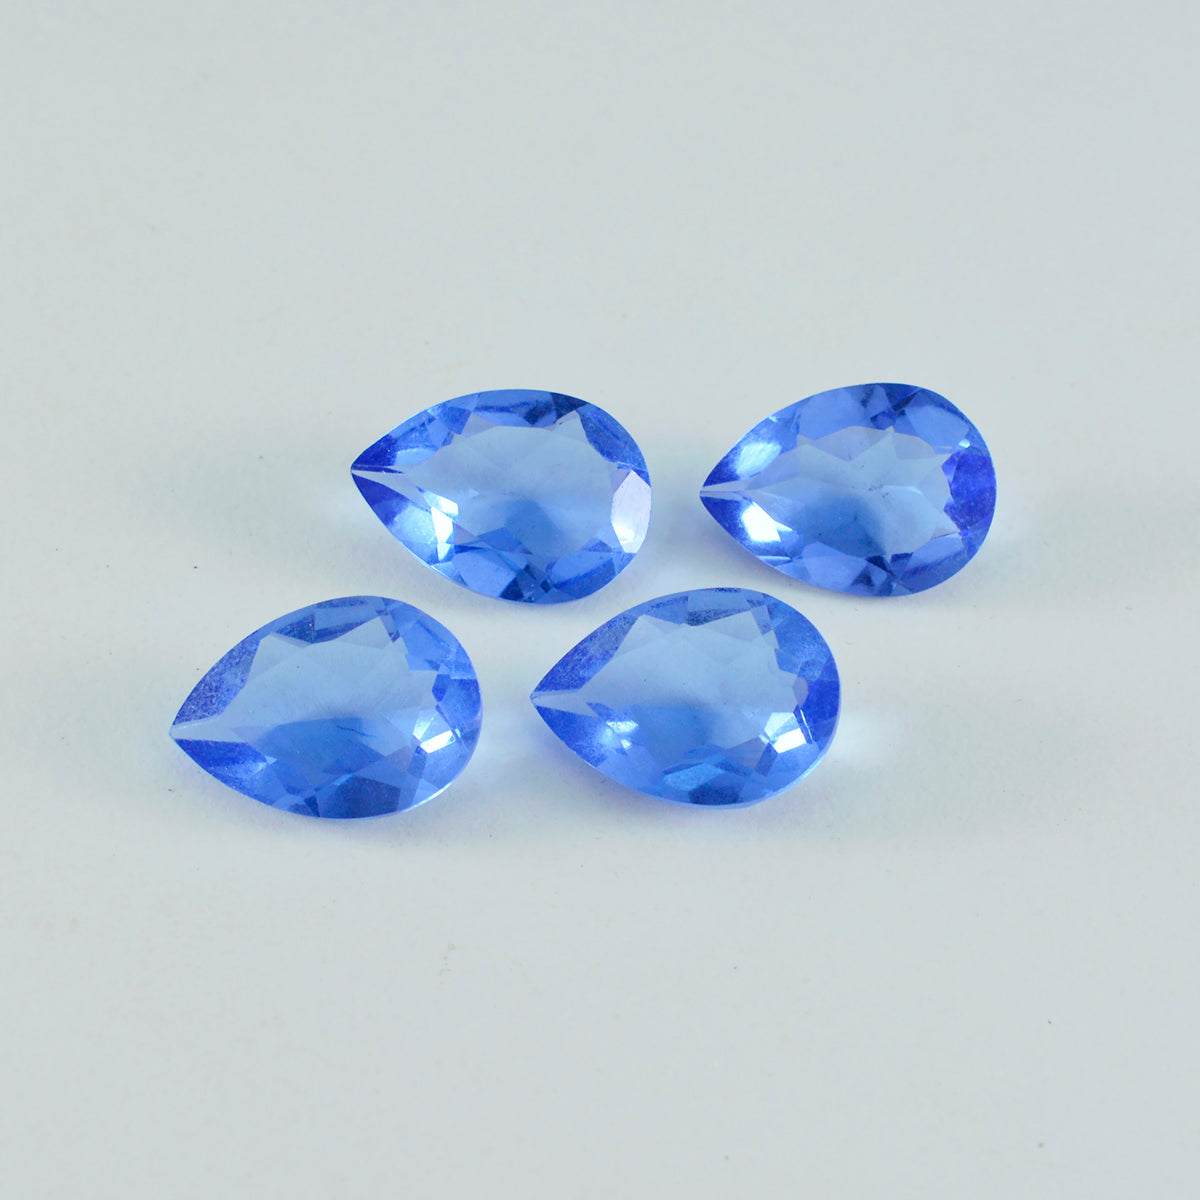 Riyogems 1PC Blauwe Saffier CZ Facet 10x14 mm Peervorm mooie Kwaliteit Losse Edelstenen